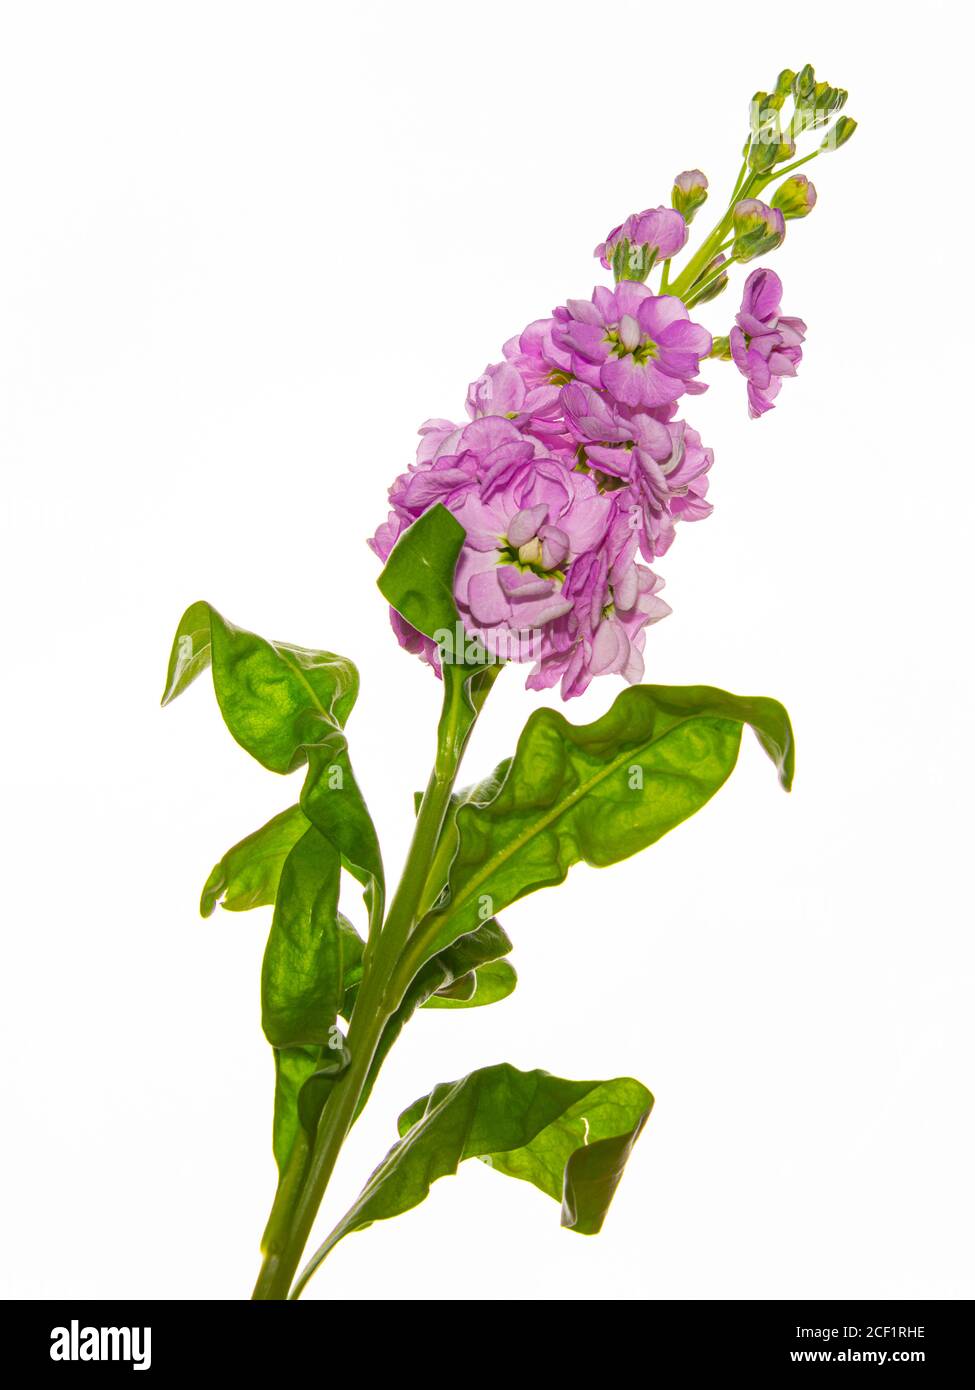 Photograph of a garden stock flower Mattiola incana taken against a white background Stock Photo